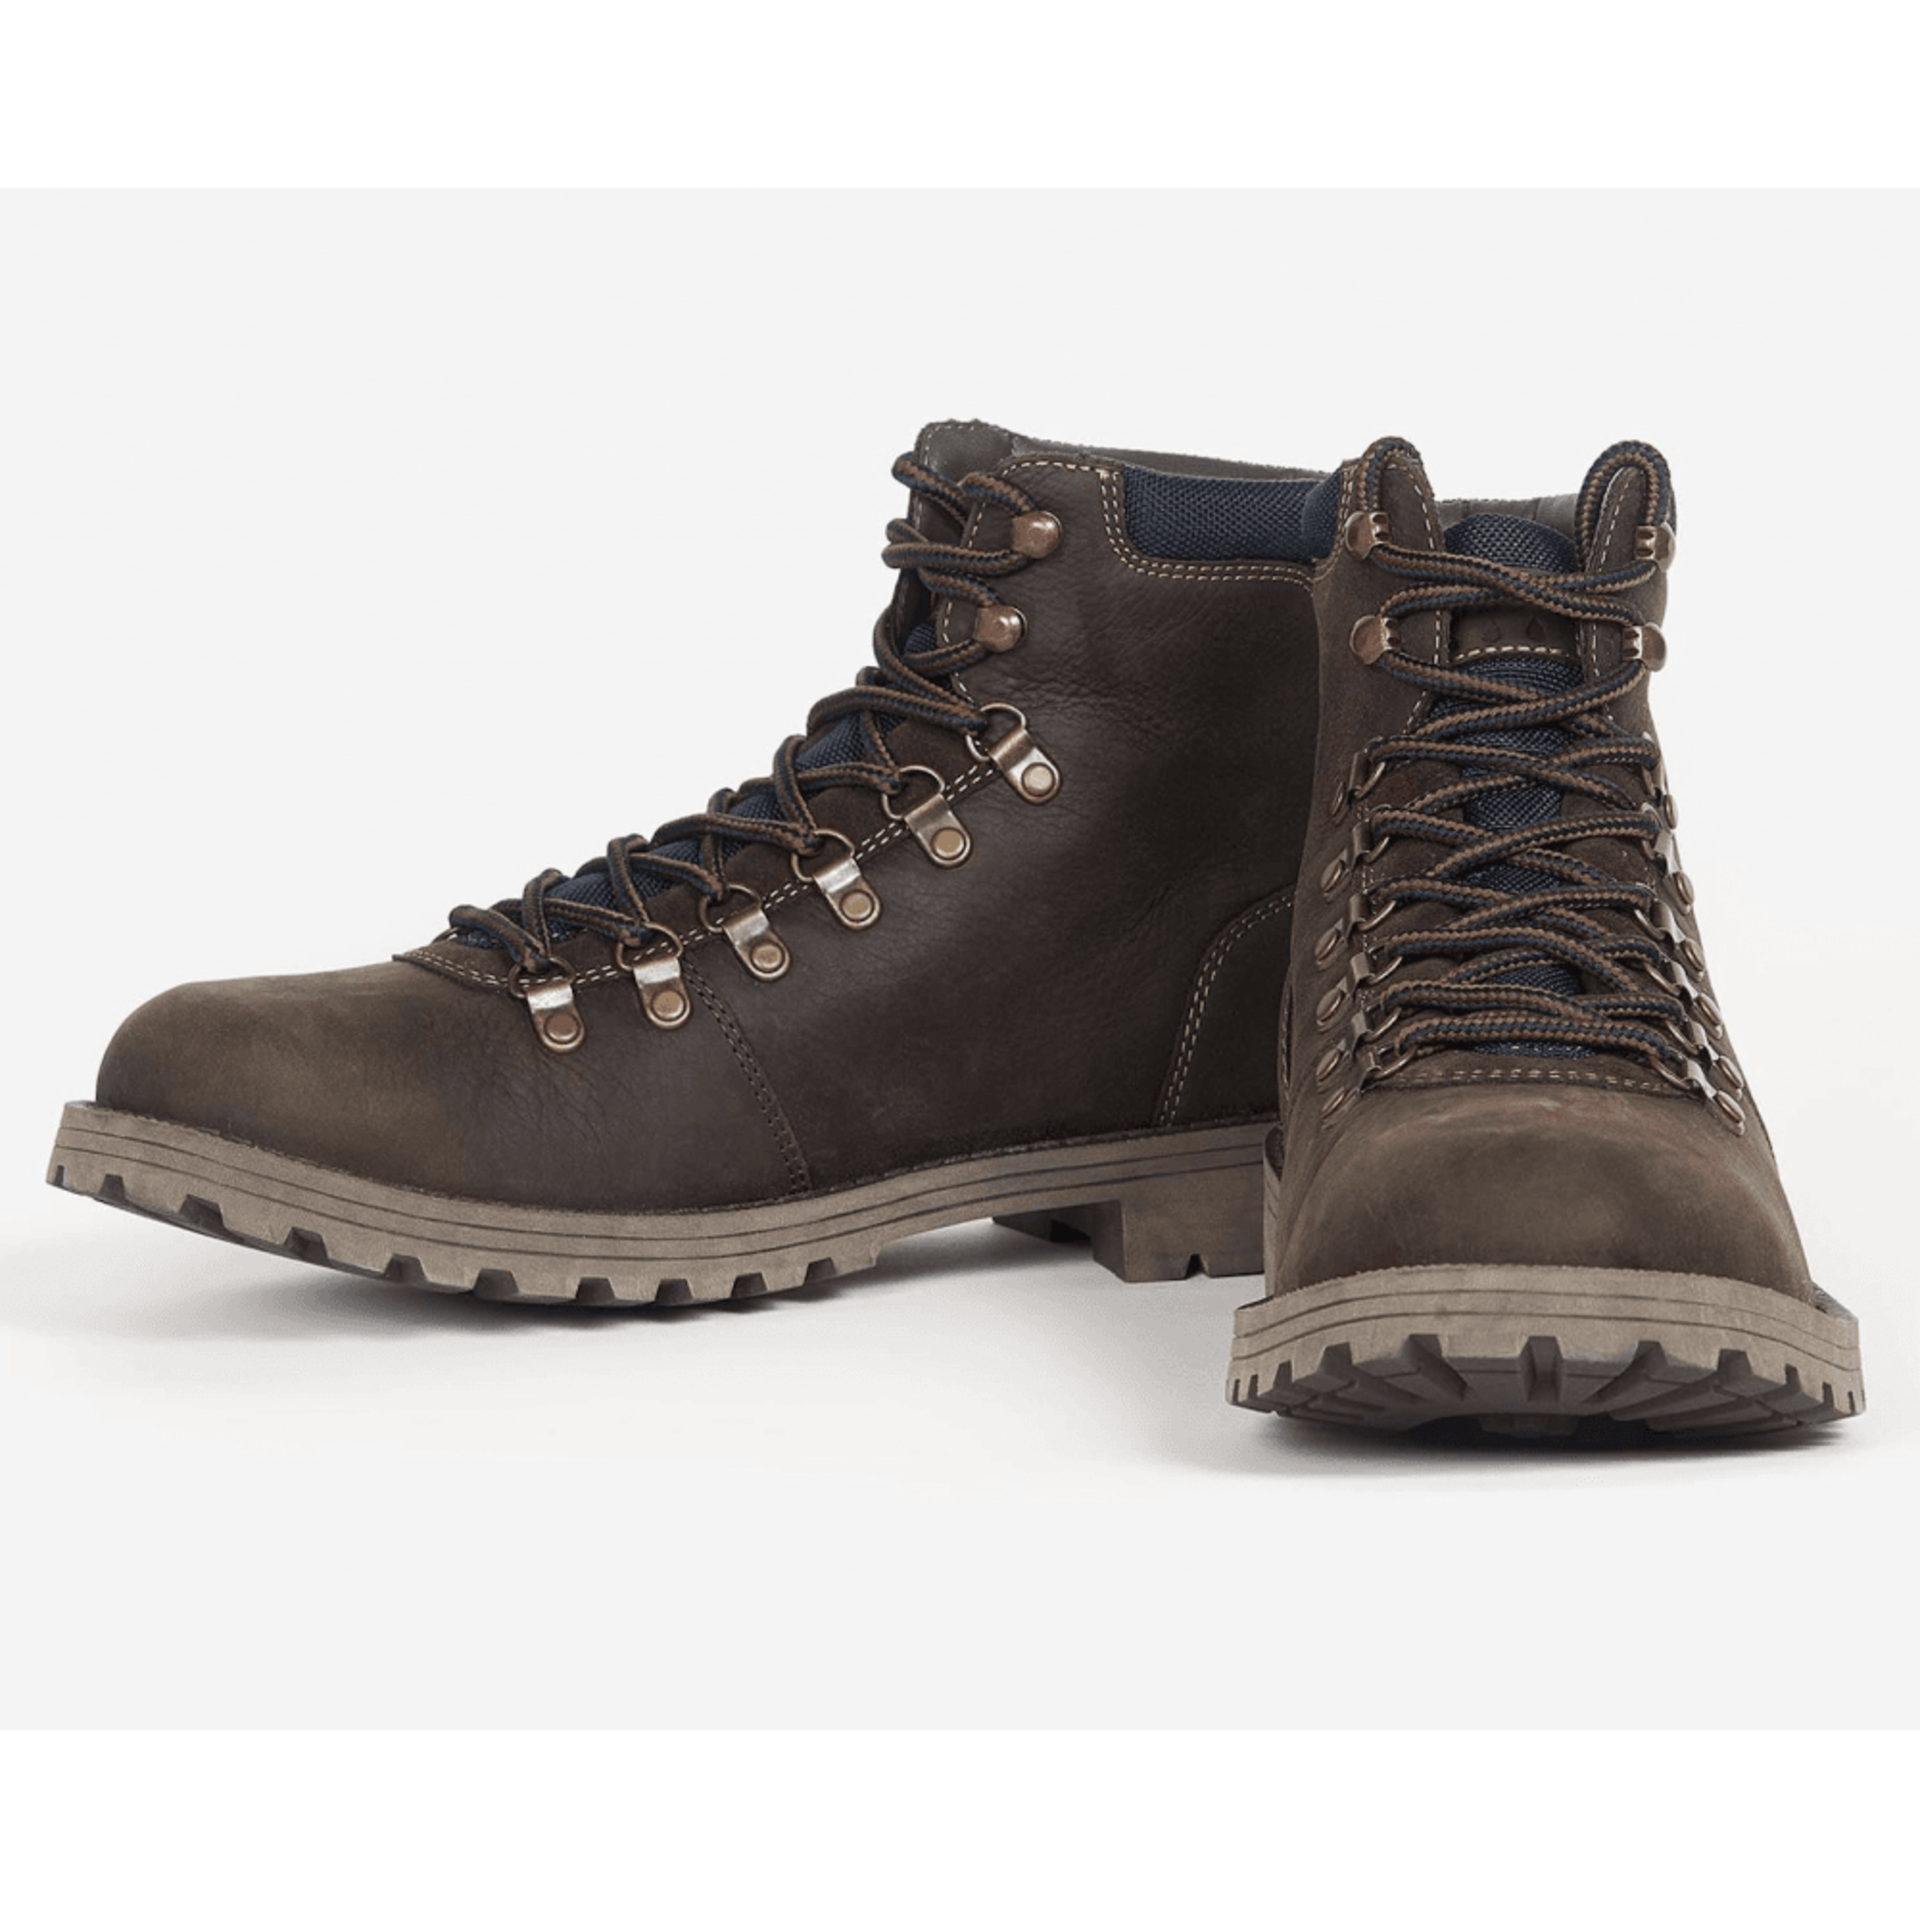 New Size 7 Barbour Oak Quantock Hiker Boots - RRP £159. - Image 2 of 3